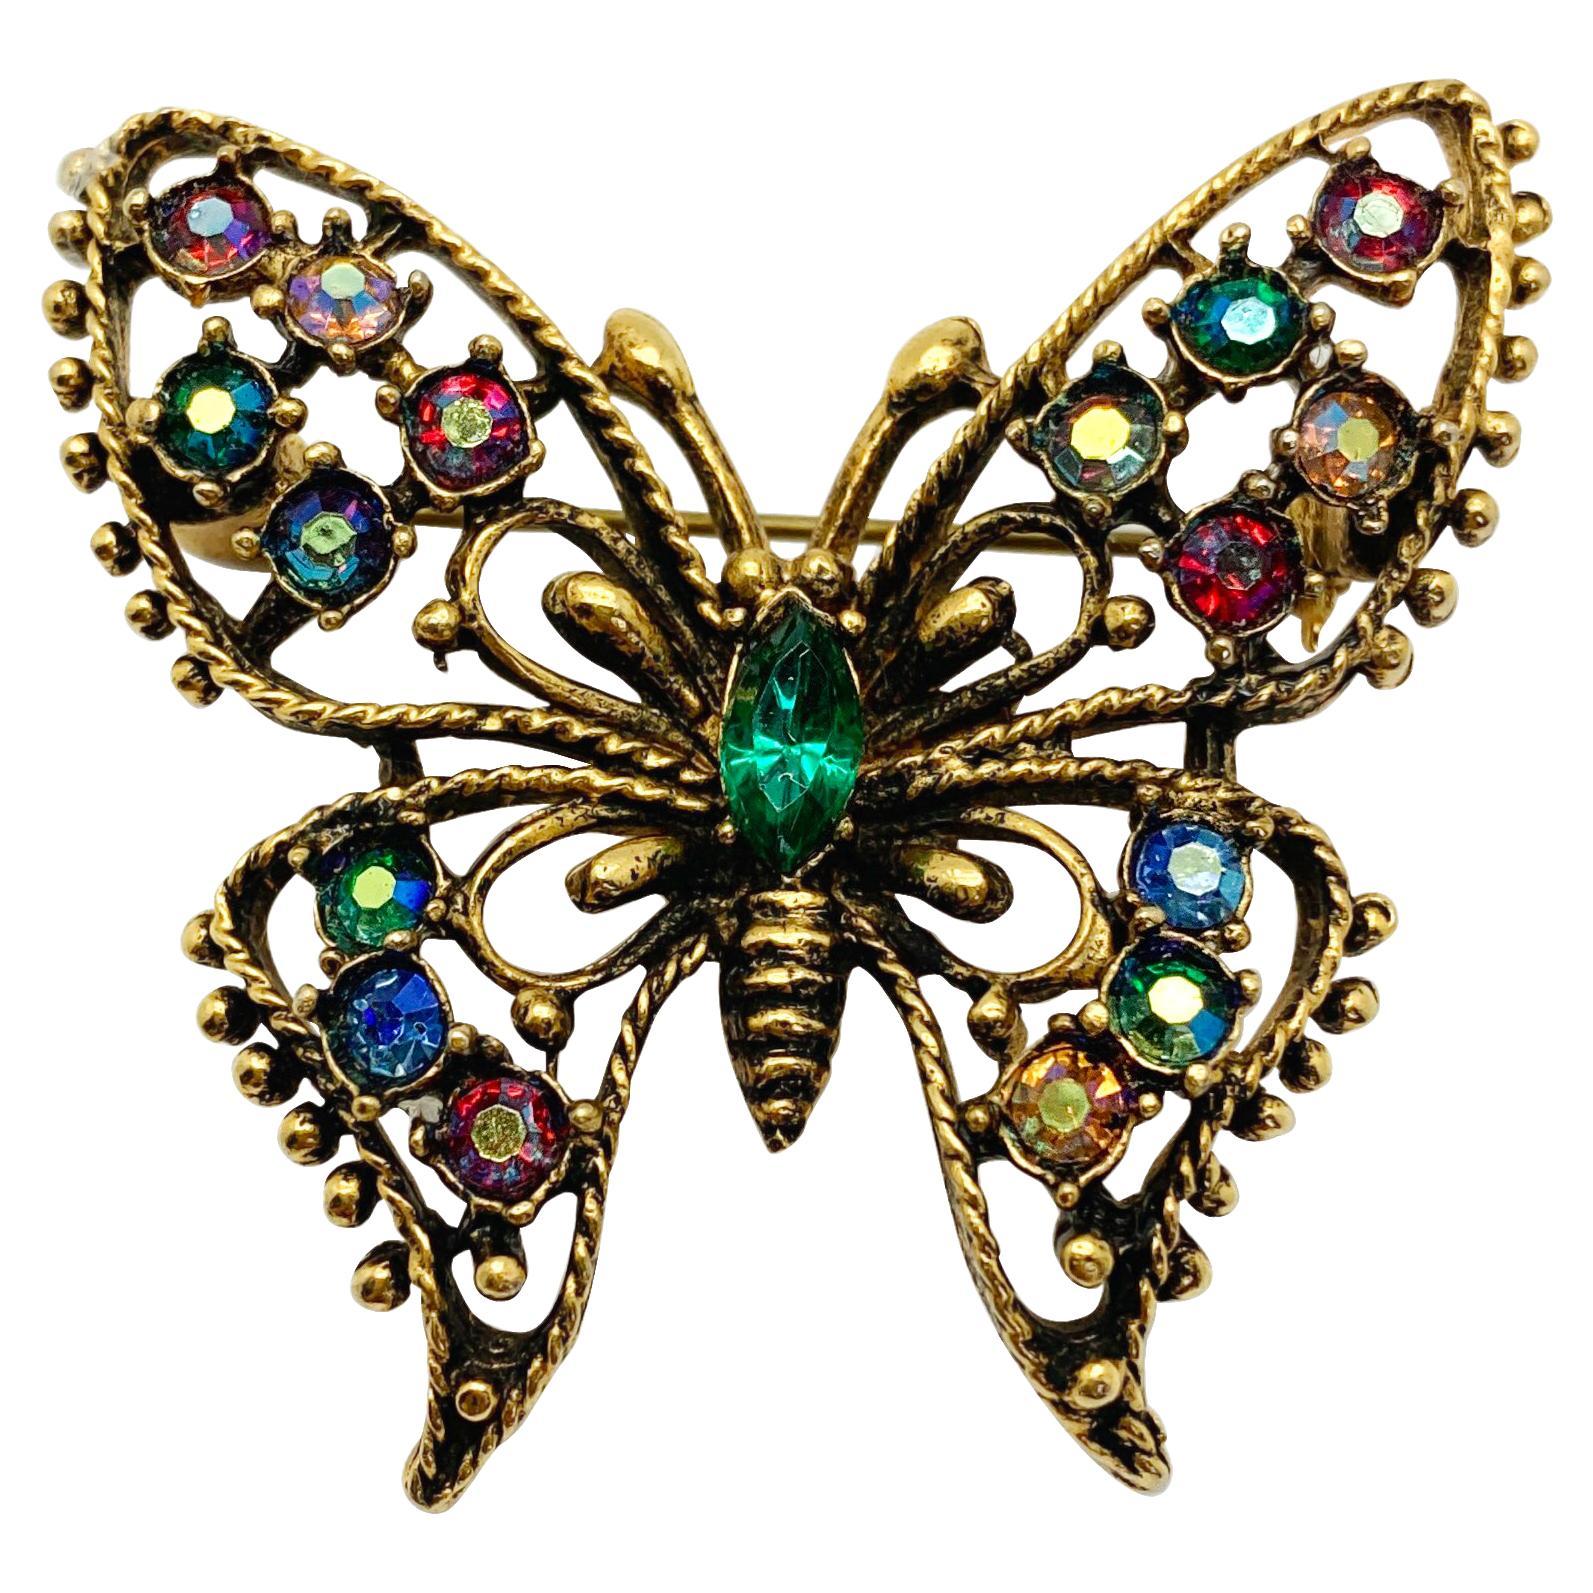 Vintage Crystal Aurora Borealis Crystal Butterfly Brooch 1960s